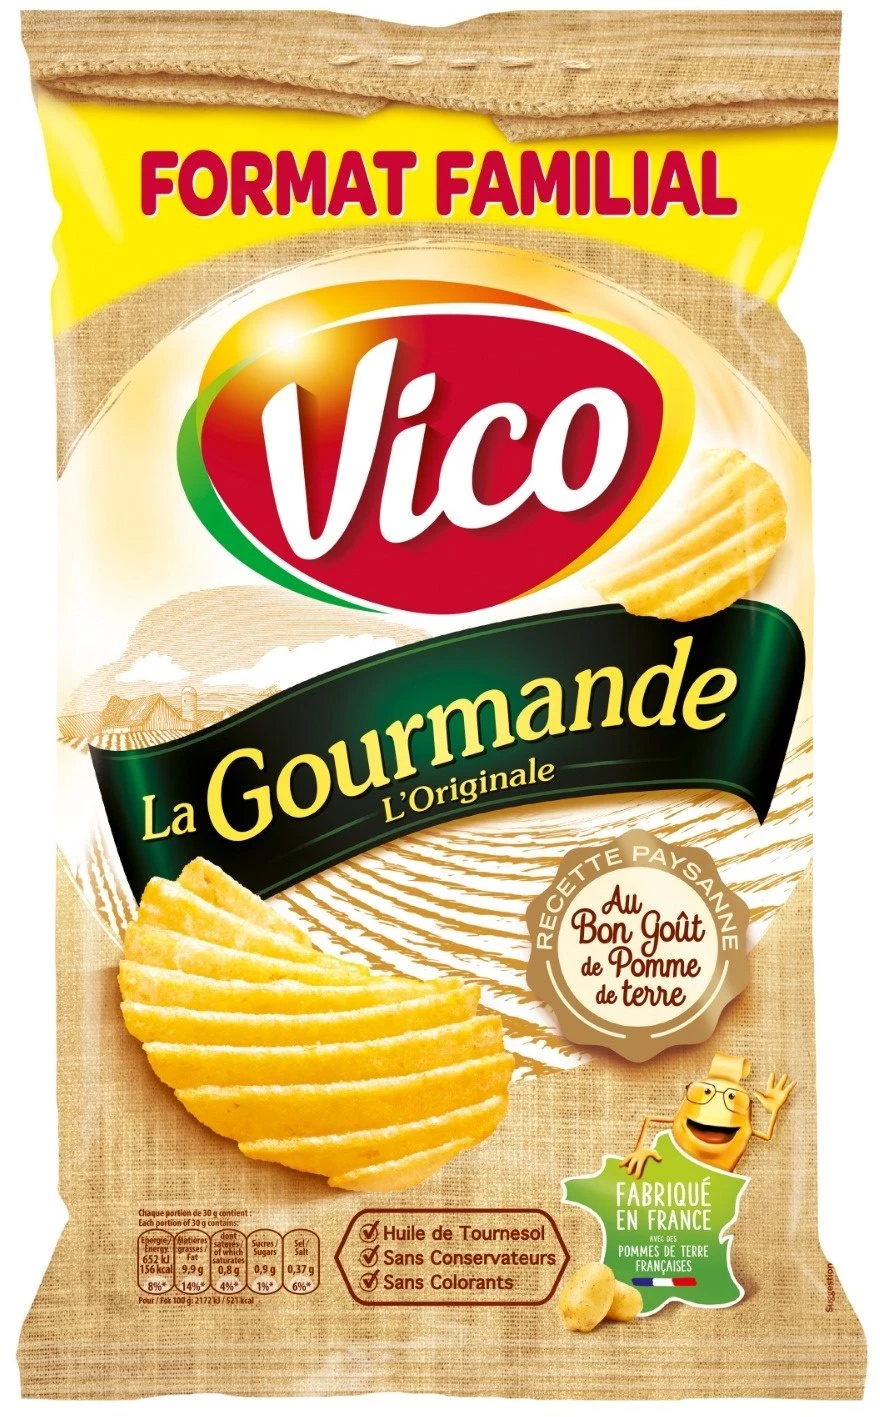 La Gourmande L'Origina 薯片, 200g - VICO